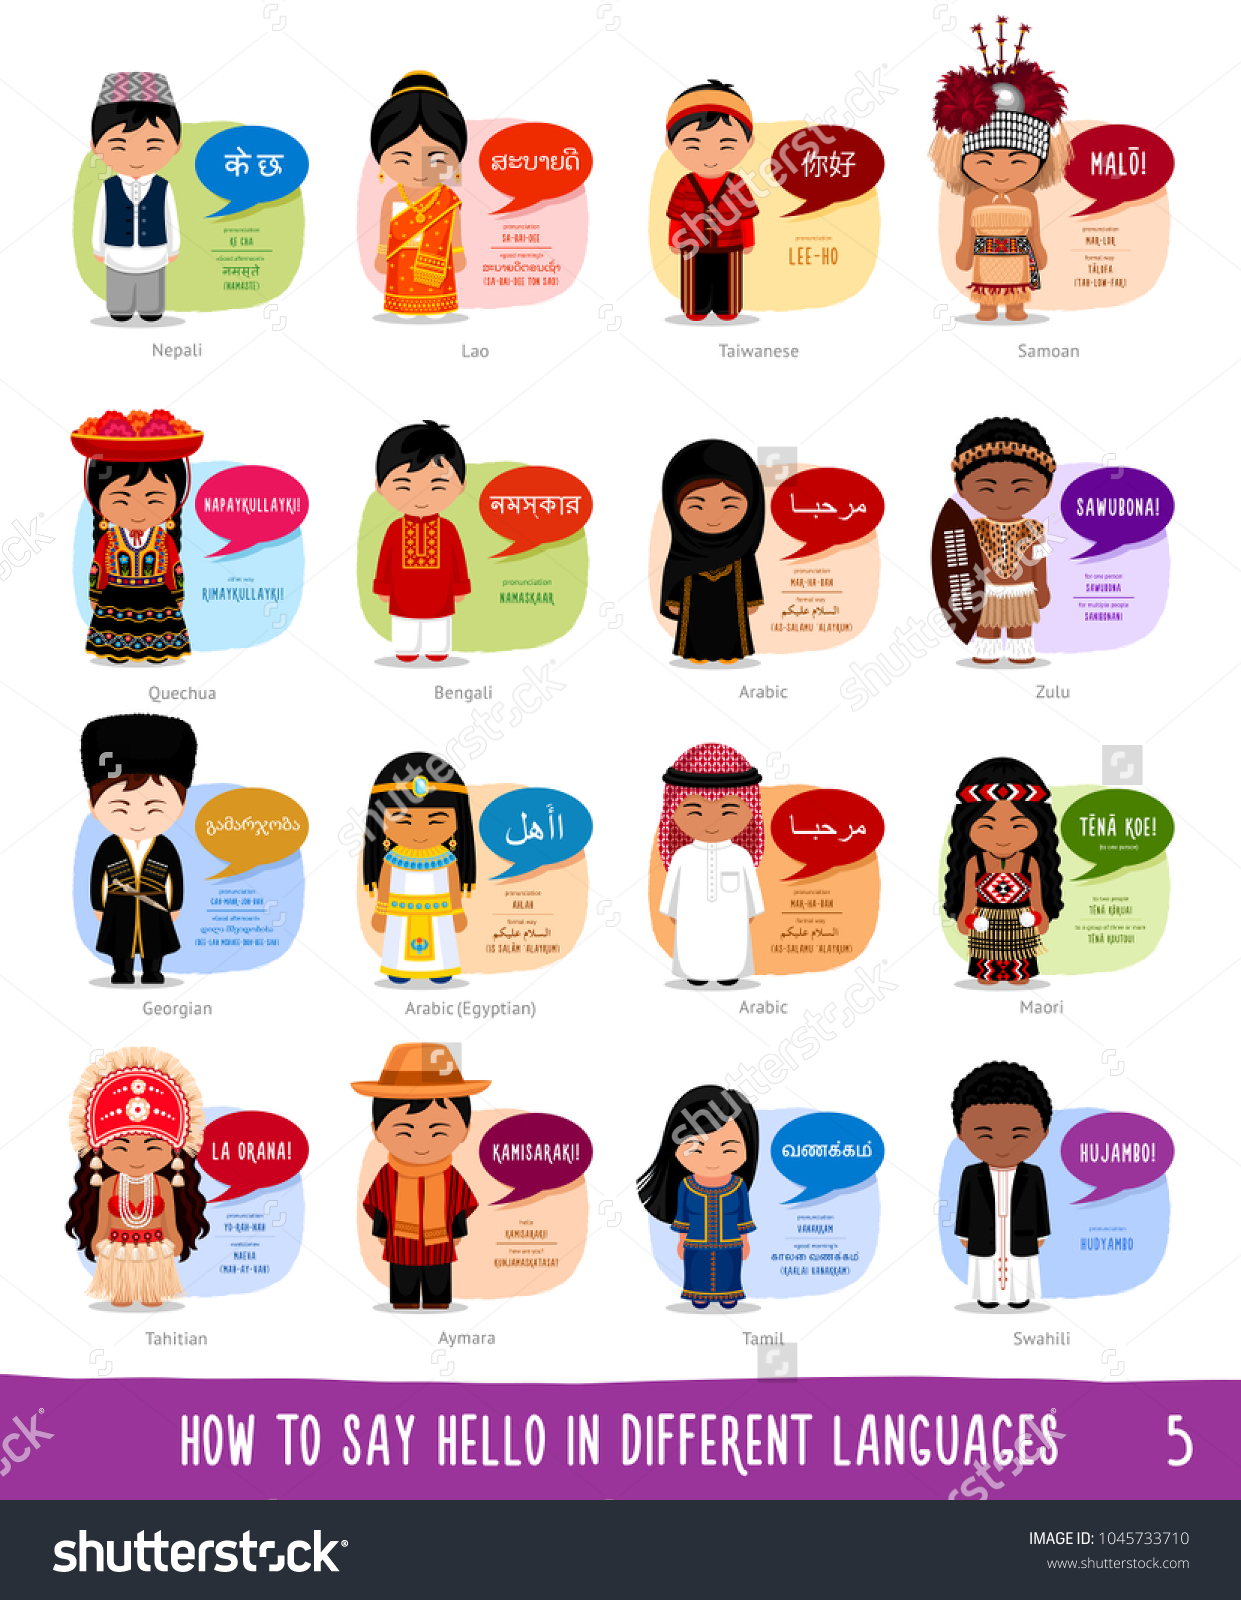 SVG of Cartoon characters saying hello in different languages: Nepali, Lao, Taiwanese, Samoan, Quechua, Bengali, Arabic, Zulu, Georgian, Egyptian, Maori, Tahitian, Aymara, Tamil, Swahili. svg